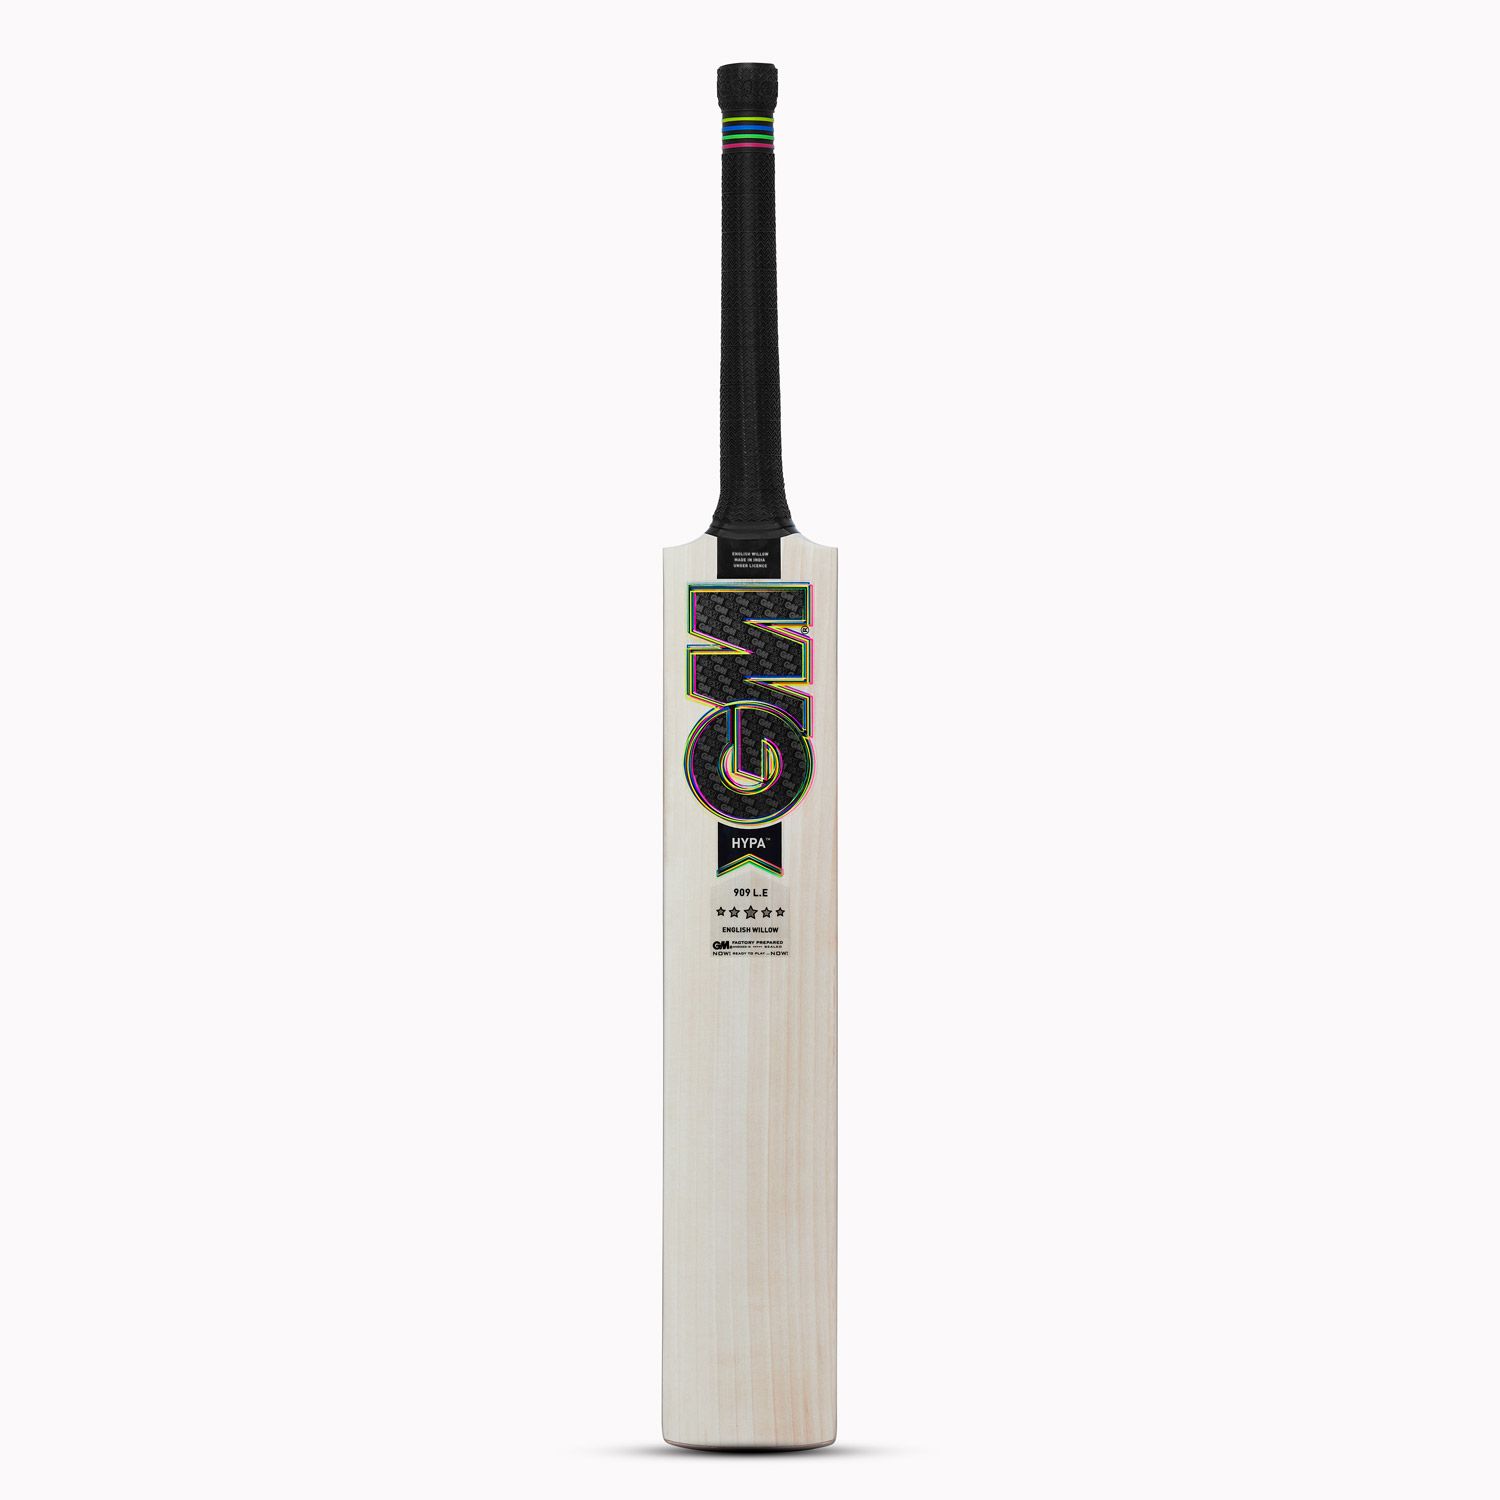 Hypa 909 L.E English Willow Cricket Bat